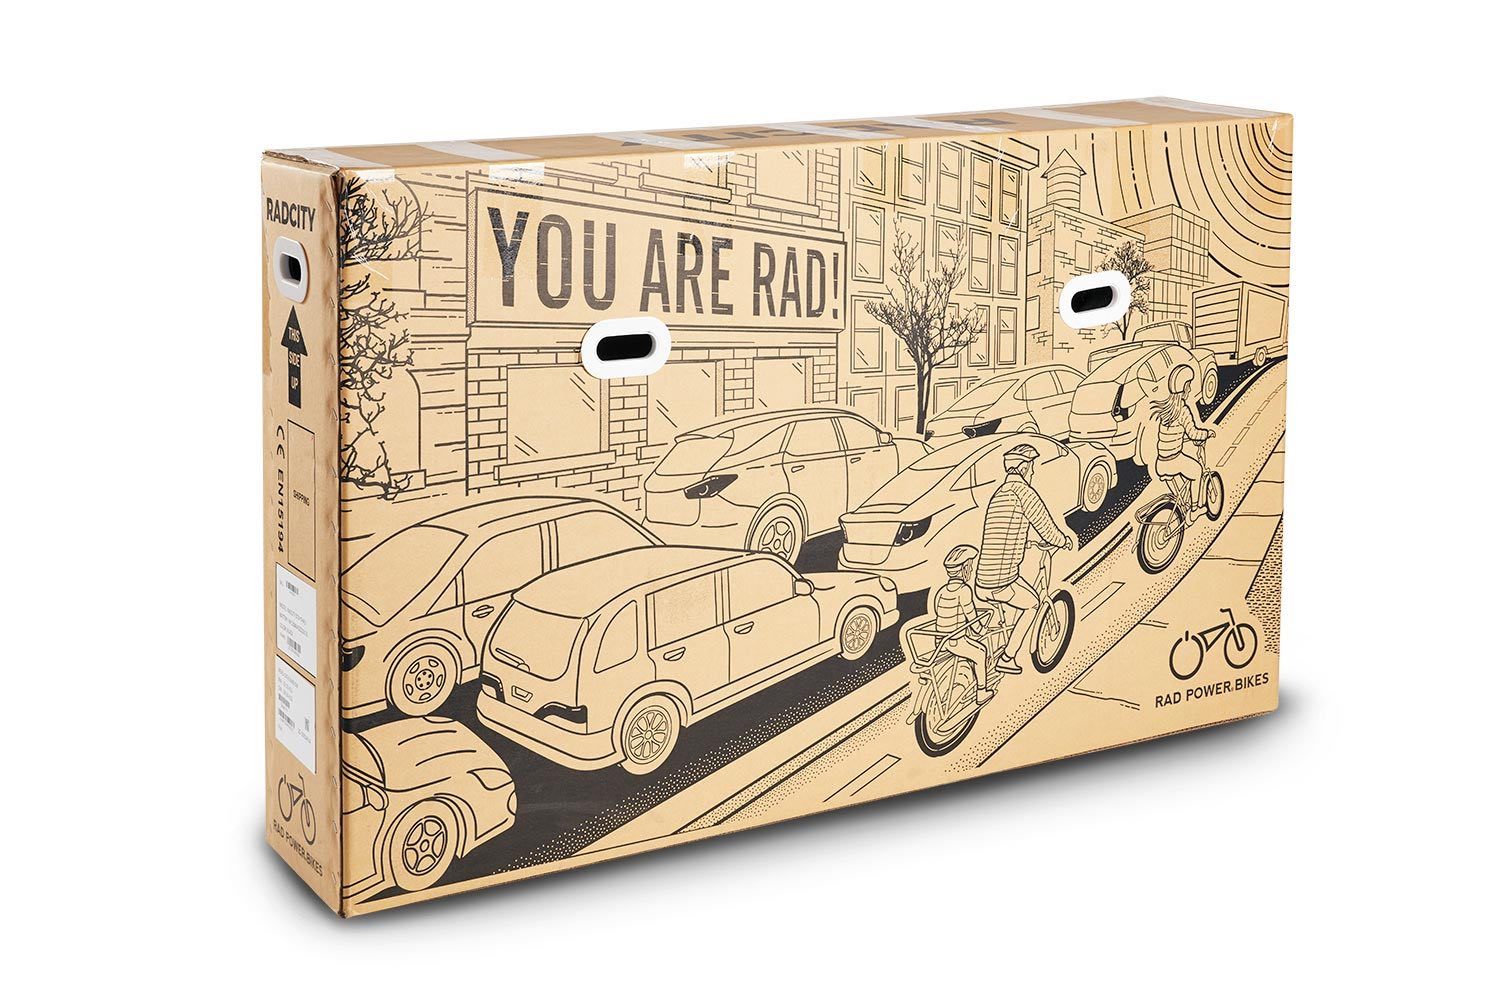 Rad Power Bikes branded ebike box